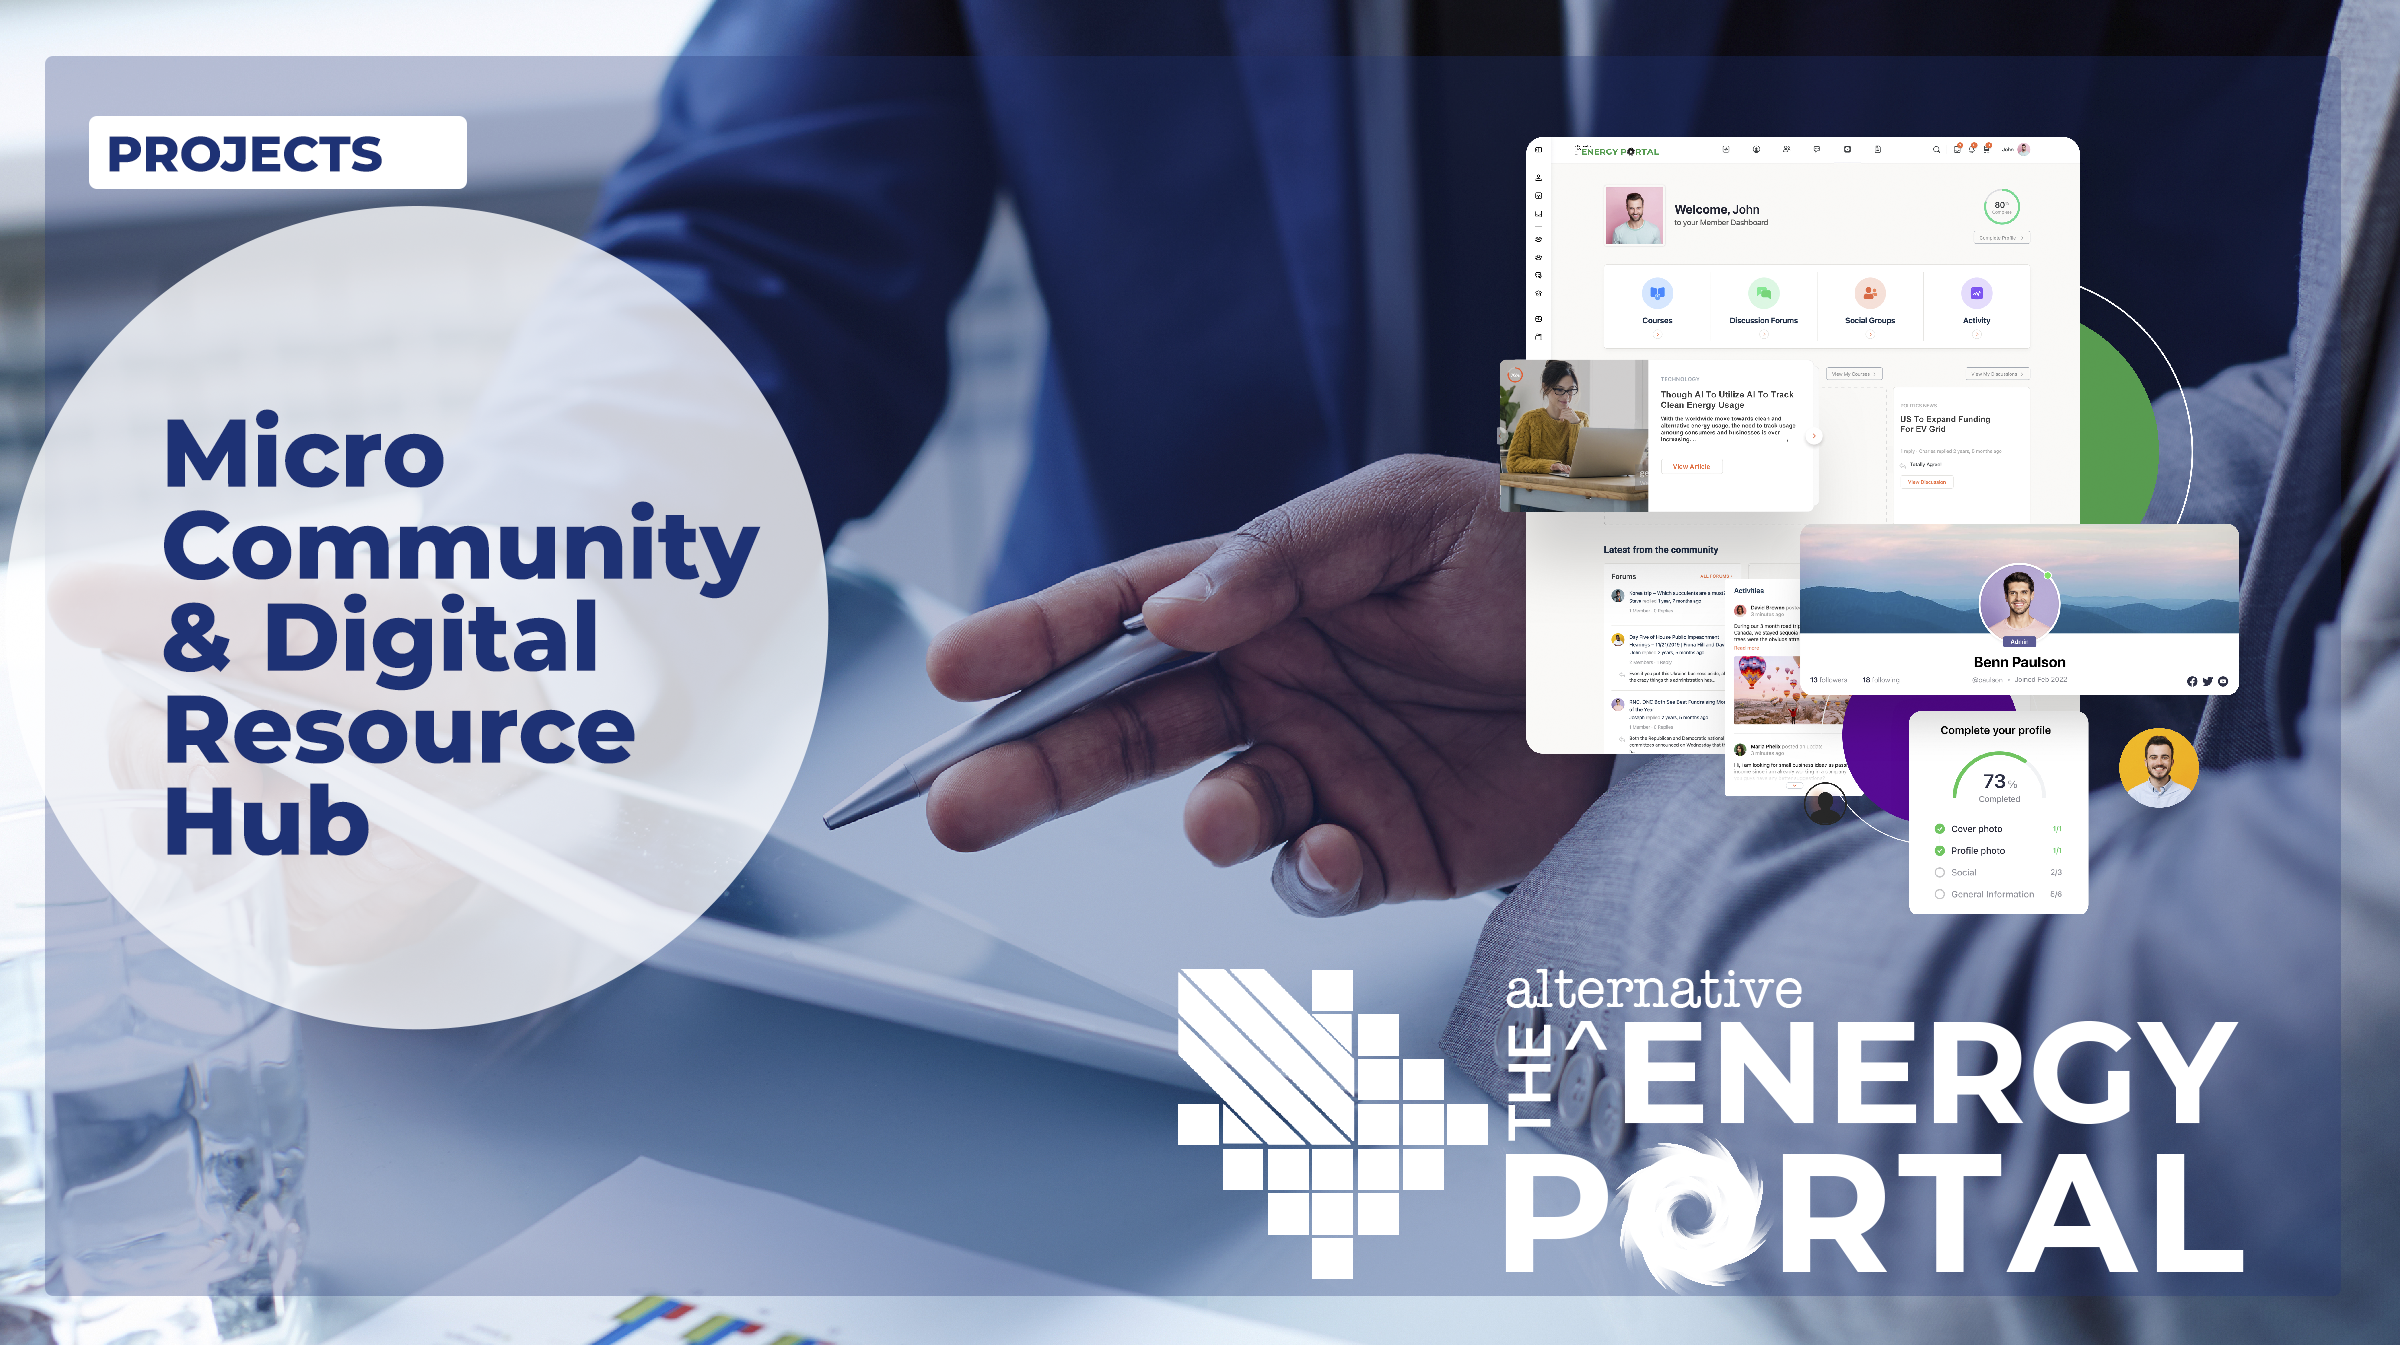 The Energy Portal